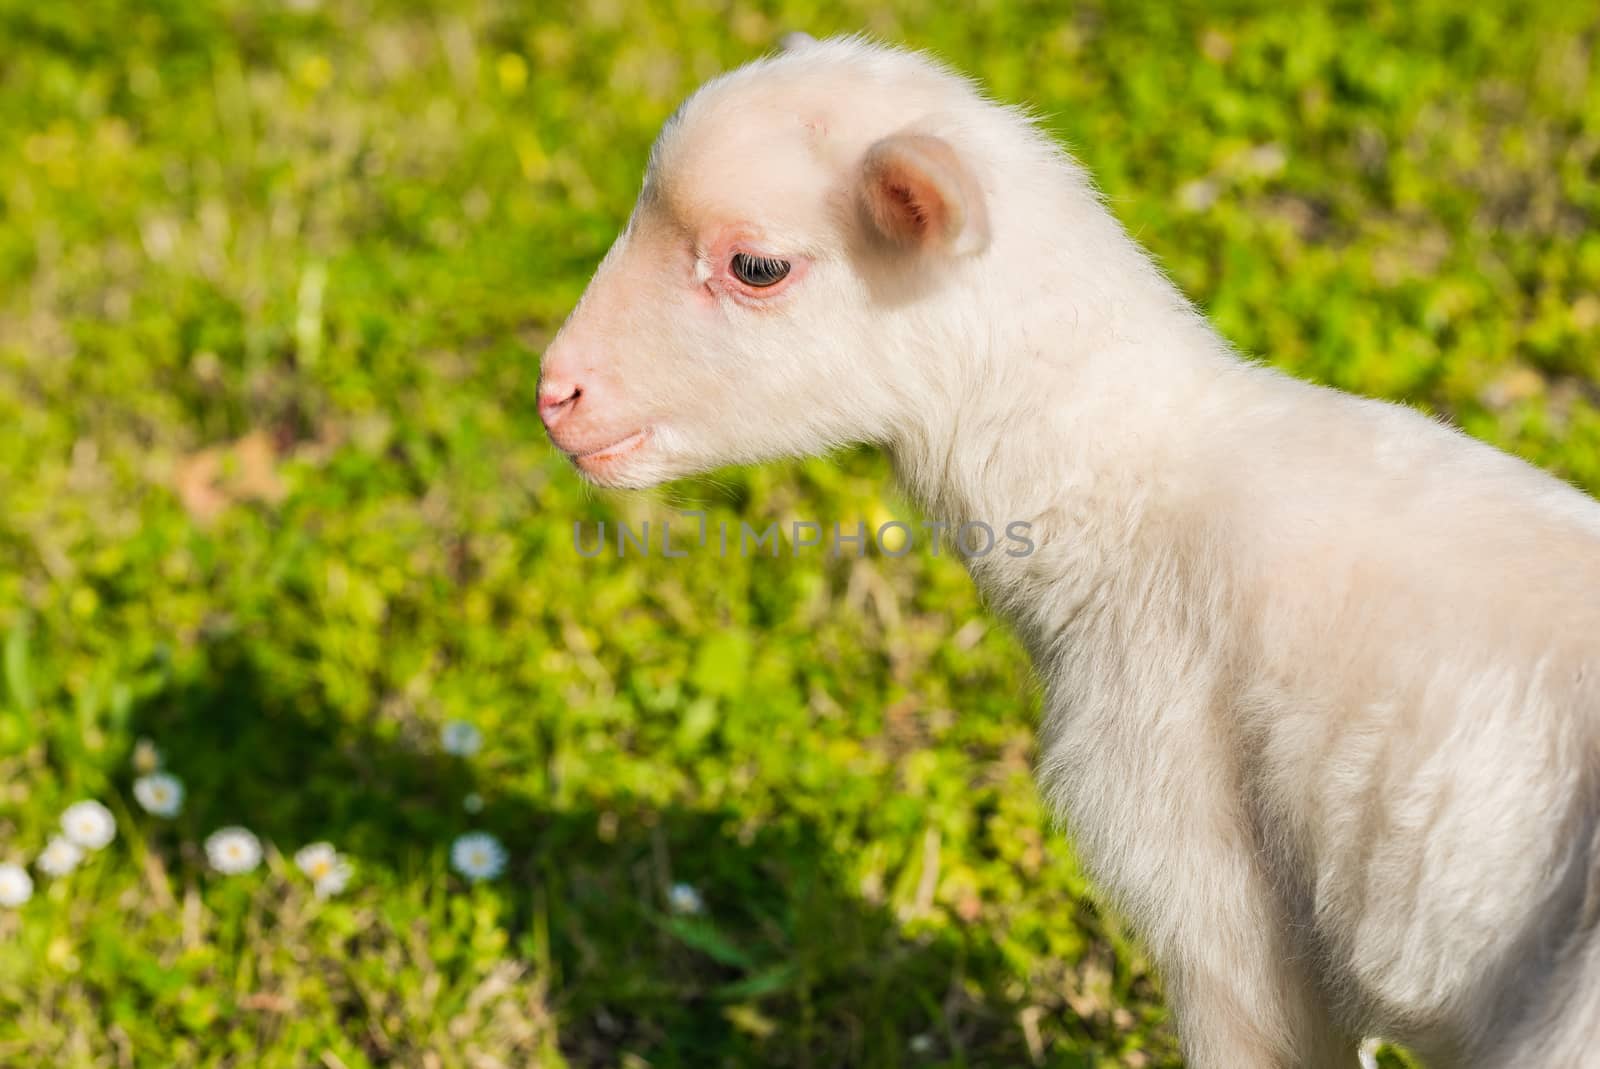 Little lamb at springtime on green grass field